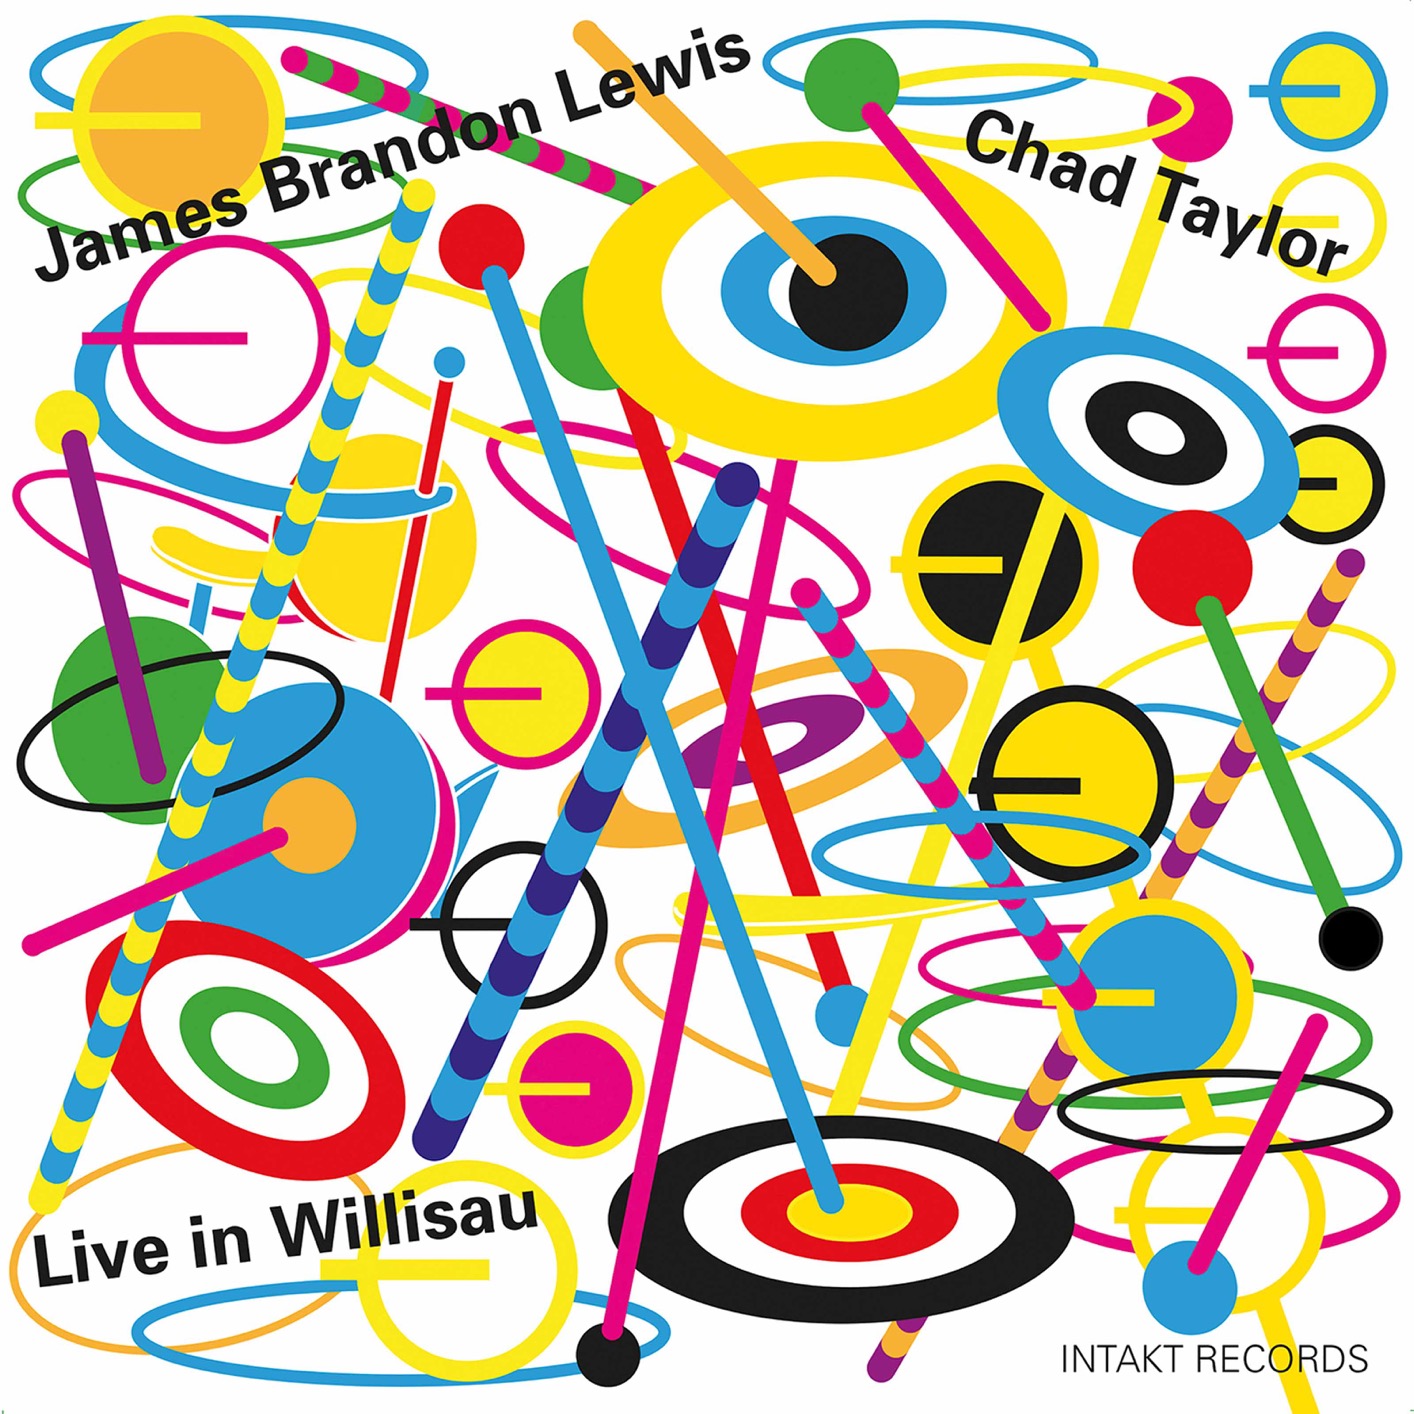 James Brandon Lewis & Chad Taylor - Live in Willisau (Live) (2020) [FLAC 24bit/48kHz]